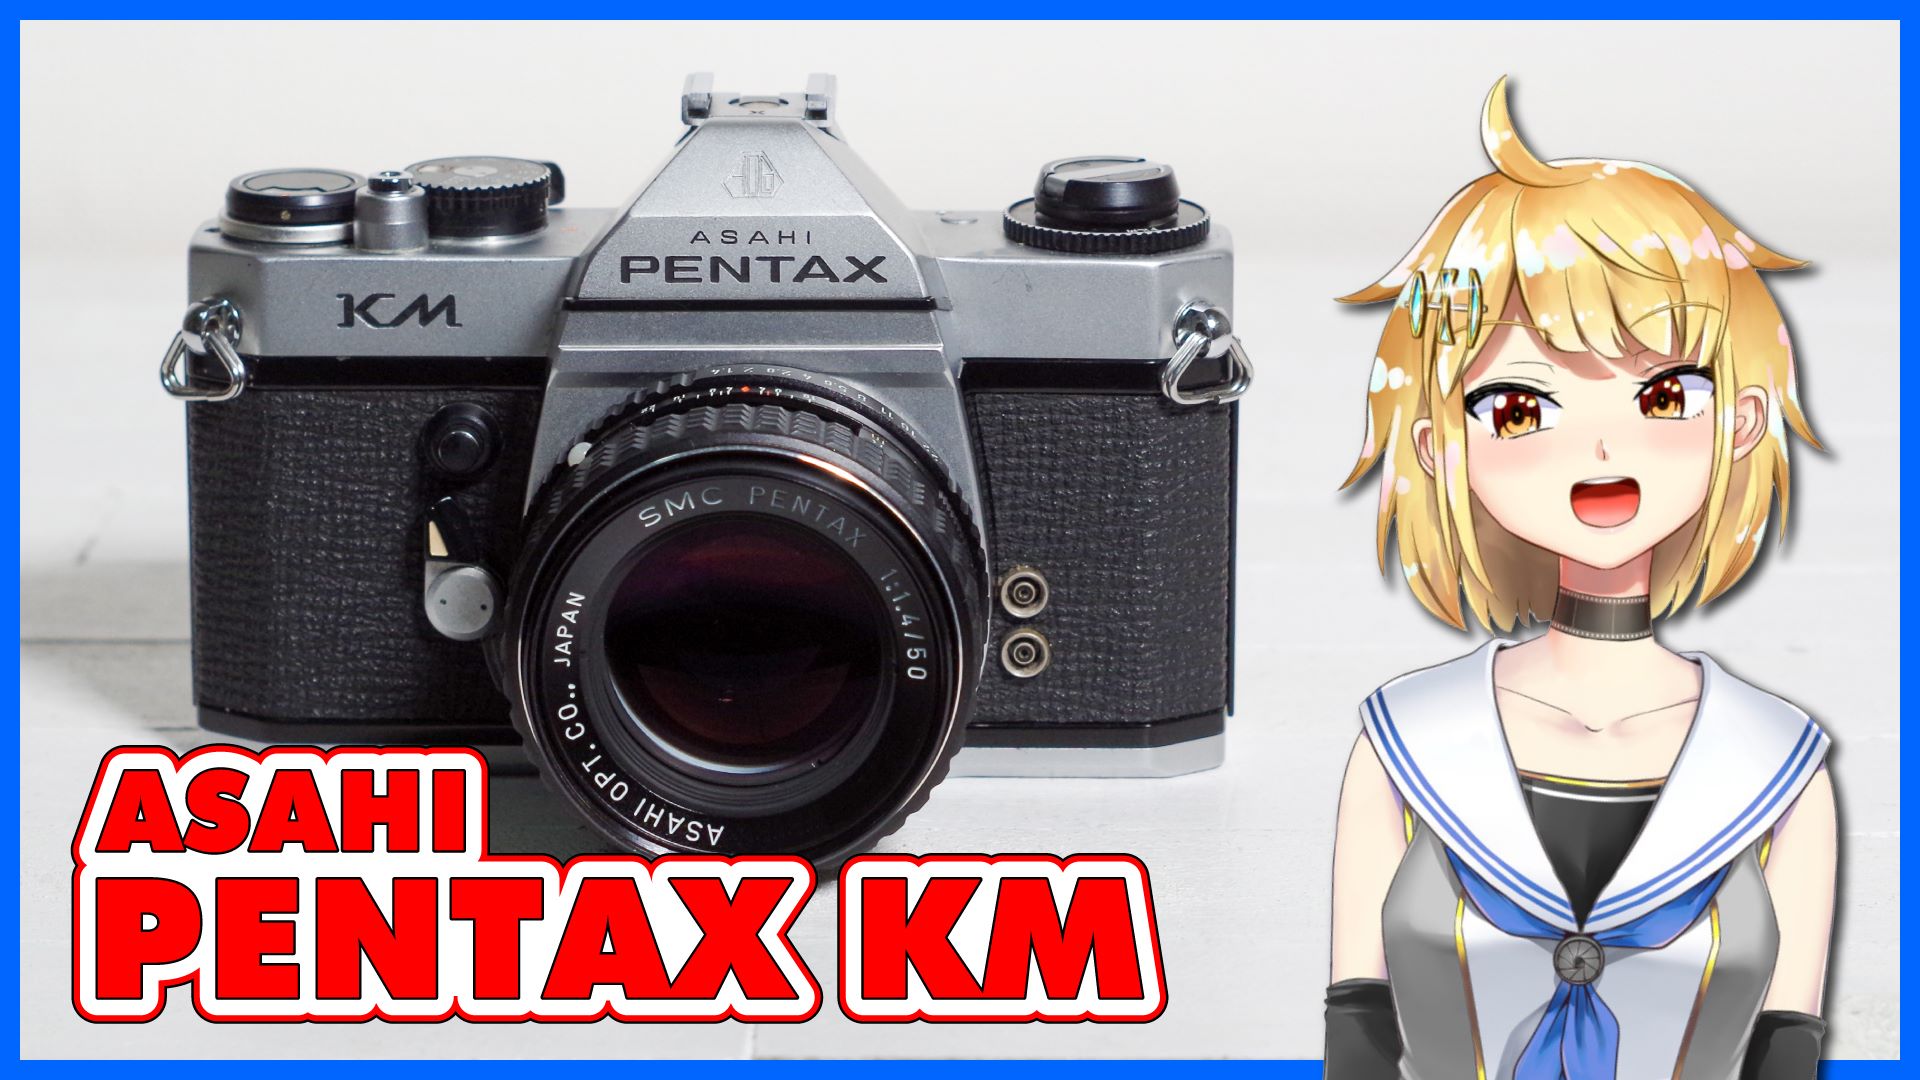 ASAHI PENTAX KM / SMC PENTAX 50mm F1.4 解説と作例 – 御部スクラ ...